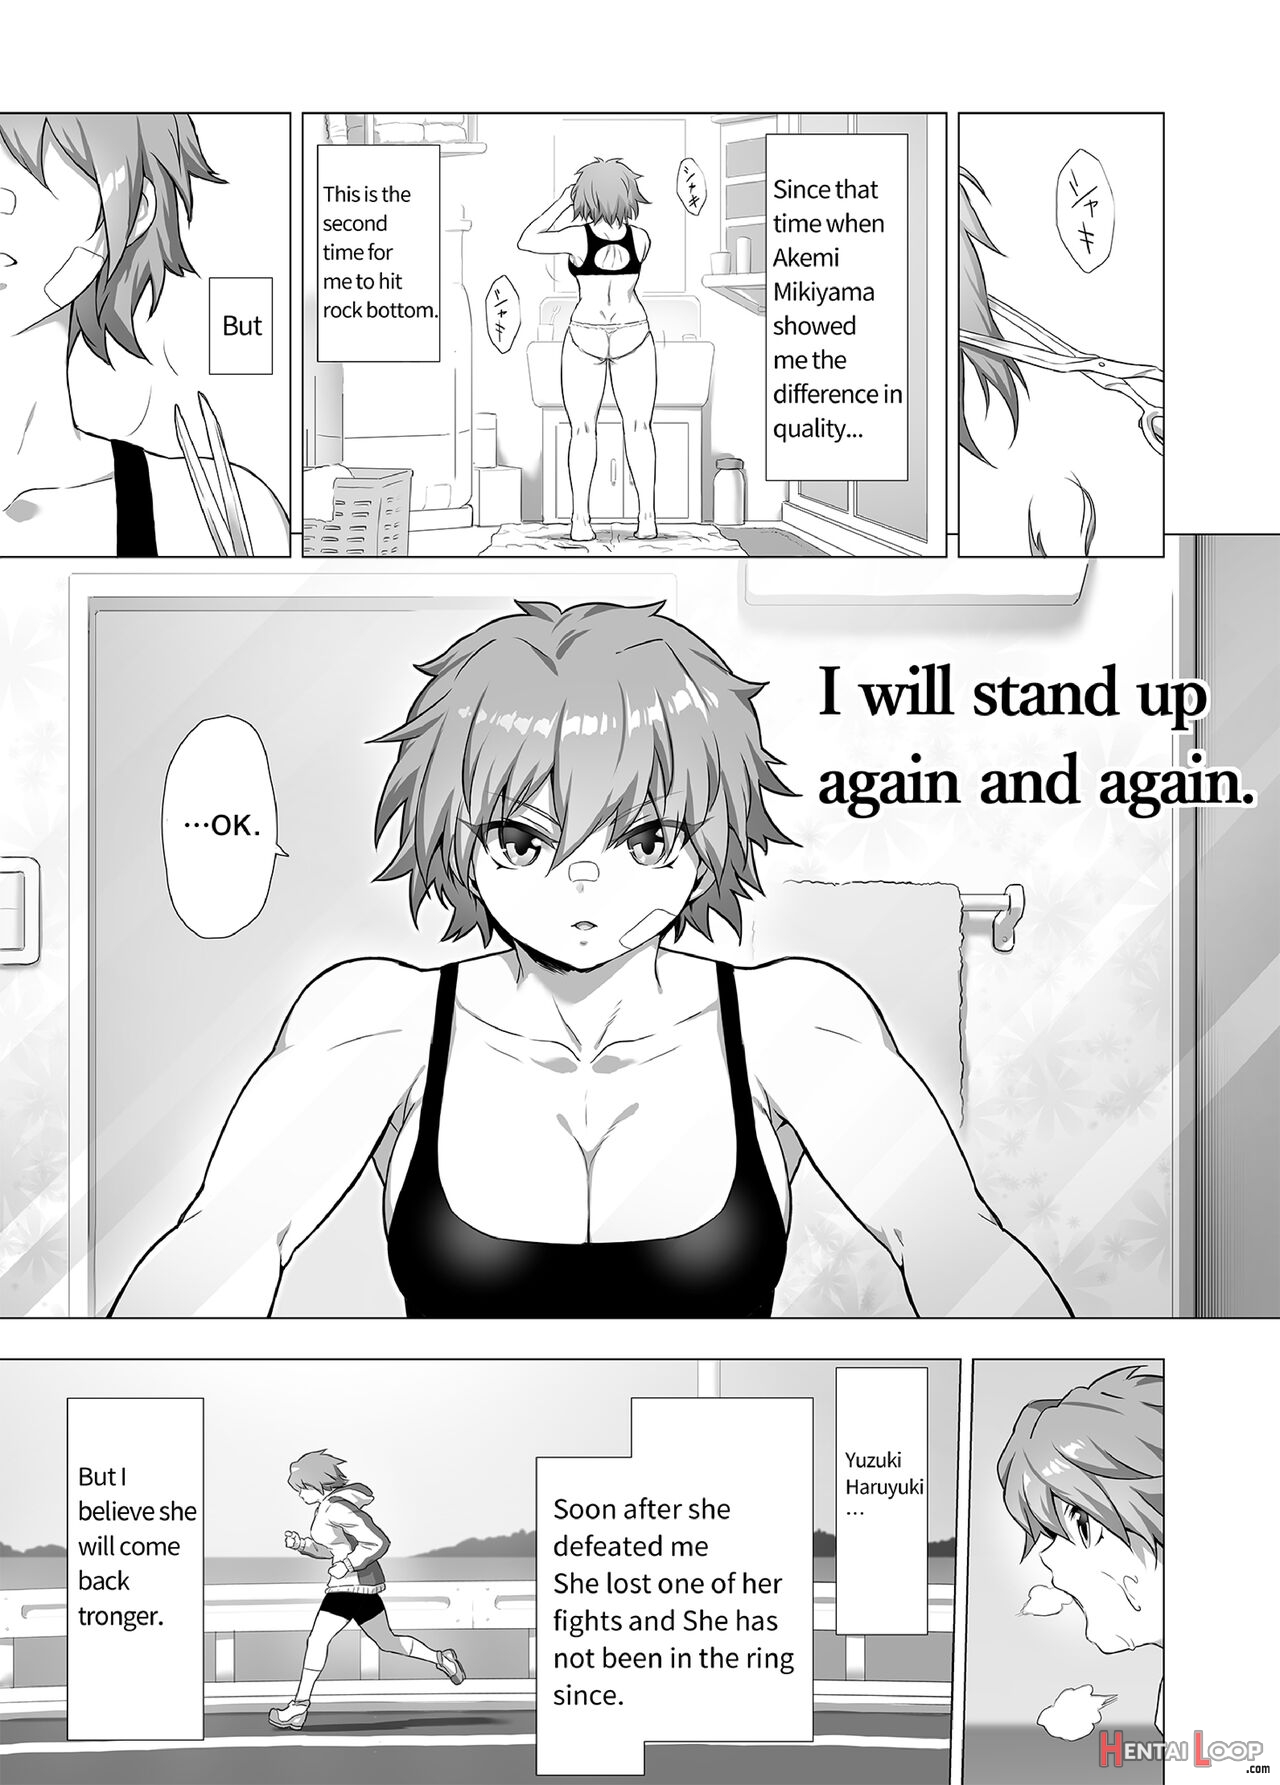 Mahiro Standup! Manga Ver. ~an New Foe Appears! Meet The Lovely Yuzuki~ page 14